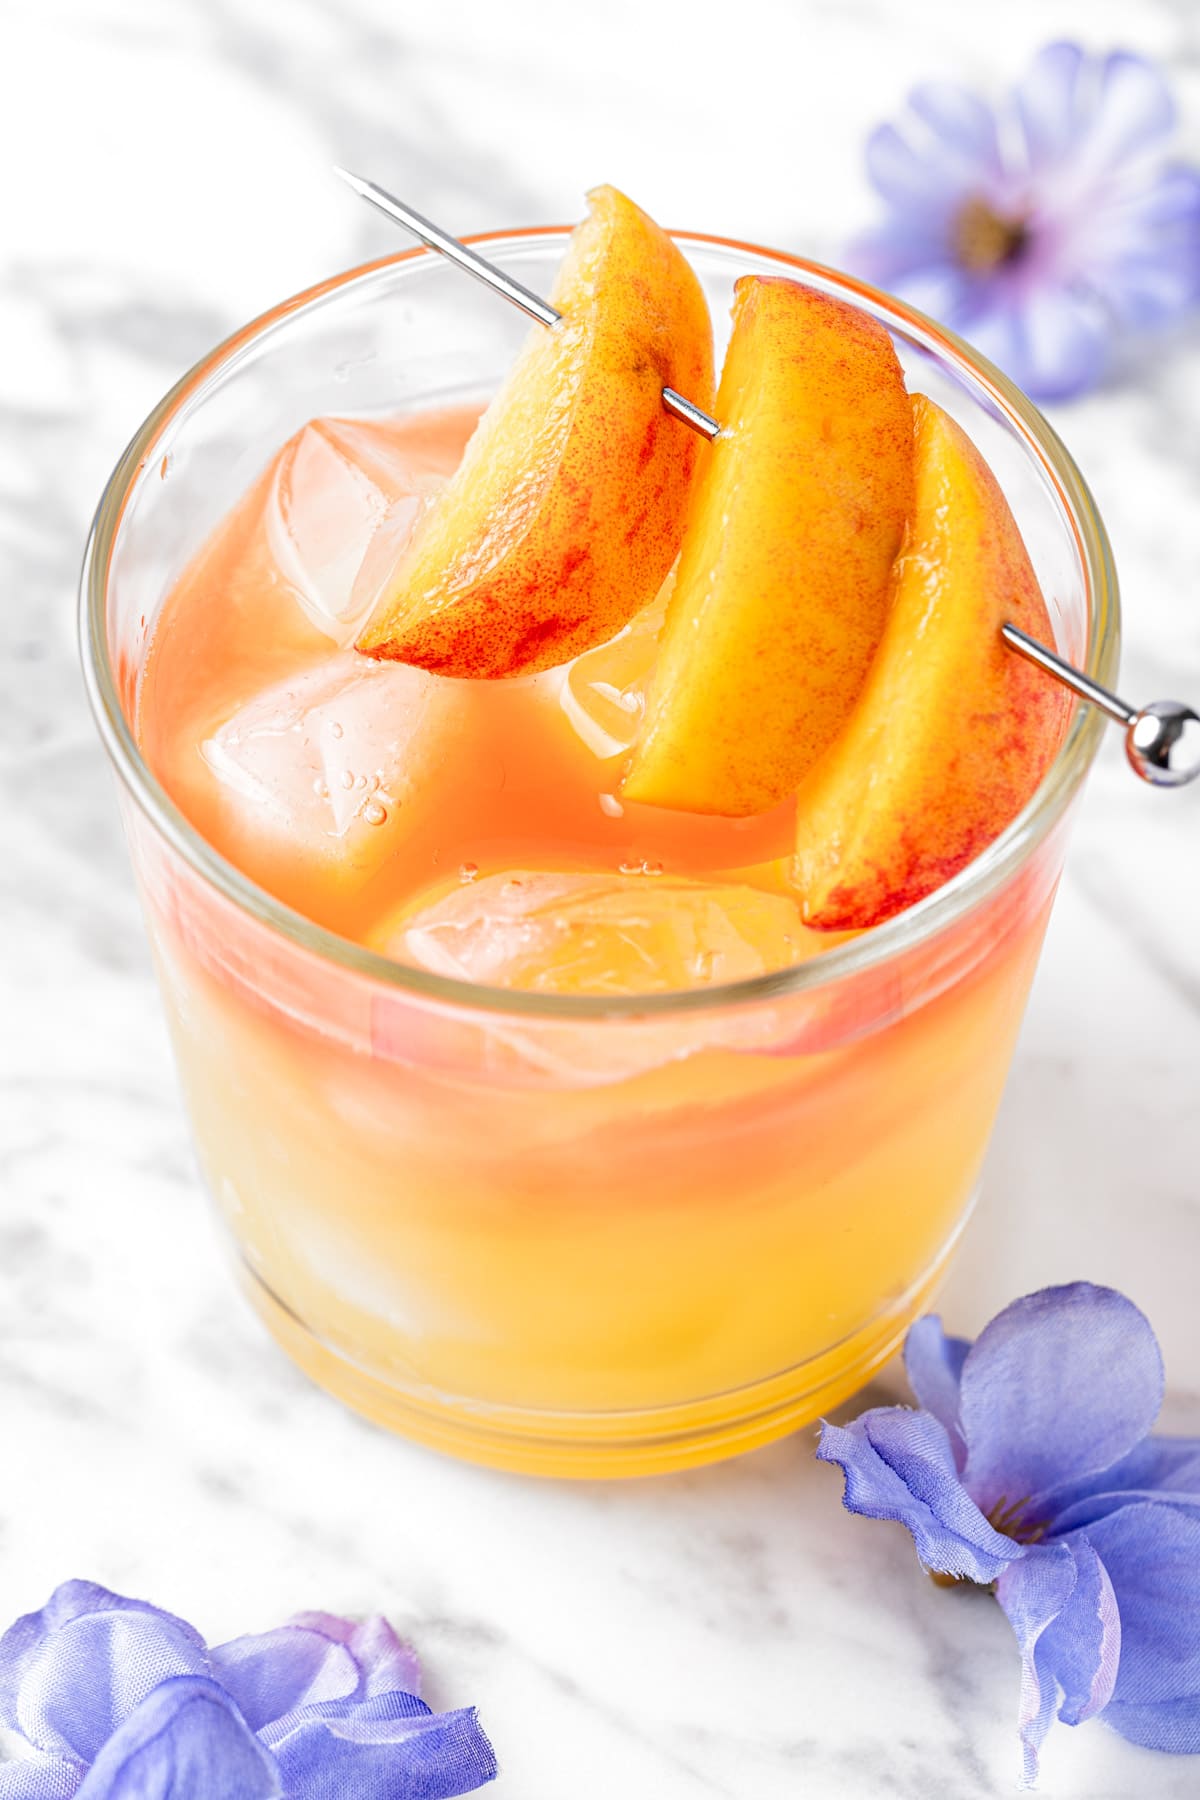 A georgia peach drink garnished with peach slices.